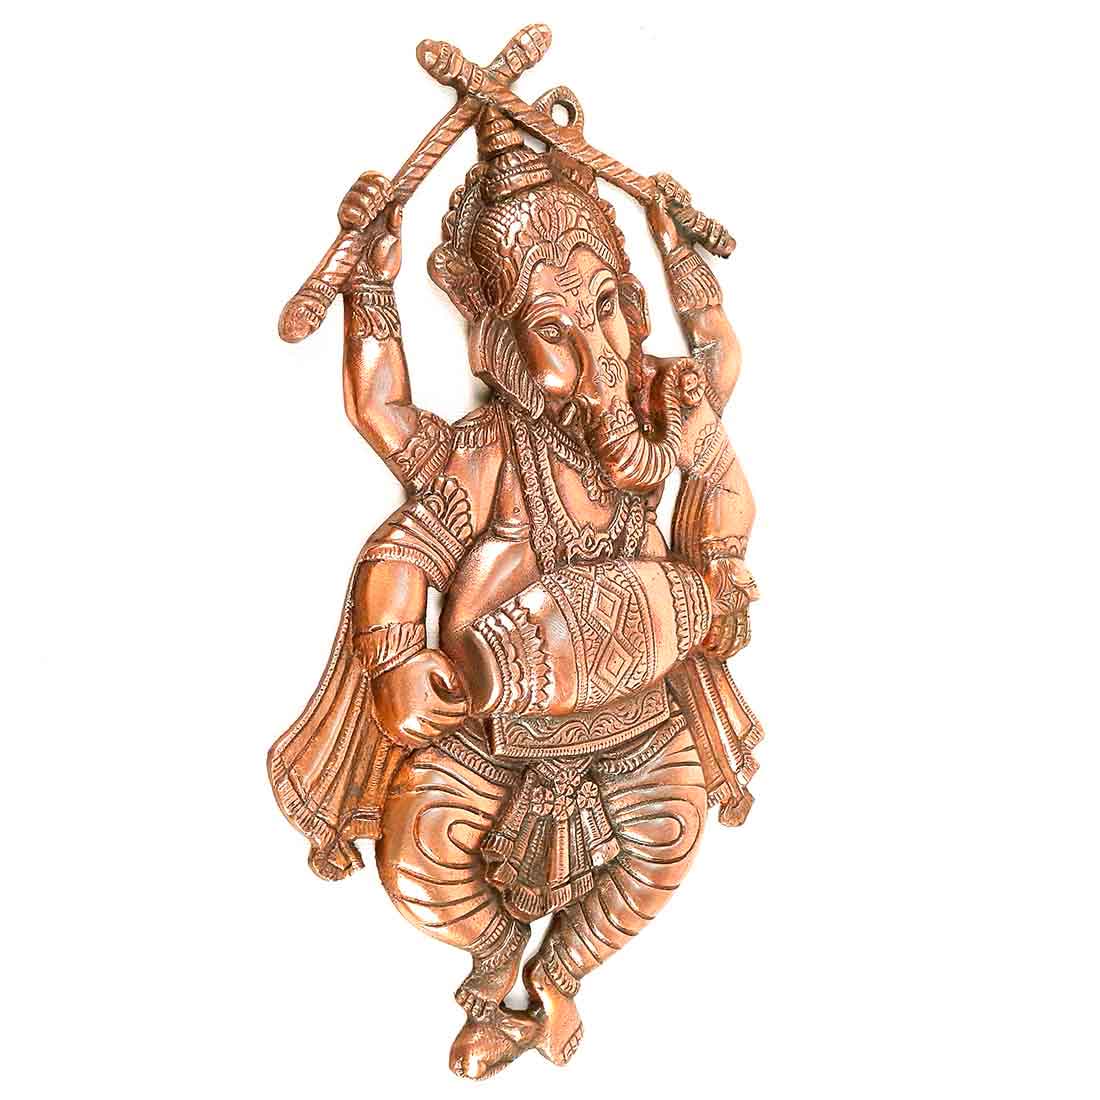 Ganesh Wall Hanging Idol | Lord Ganesha Dancing Pose Wall Statue Decor | Ganpati Idol for Home, Living Room, Puja & Religious Decor  - 18 Inch